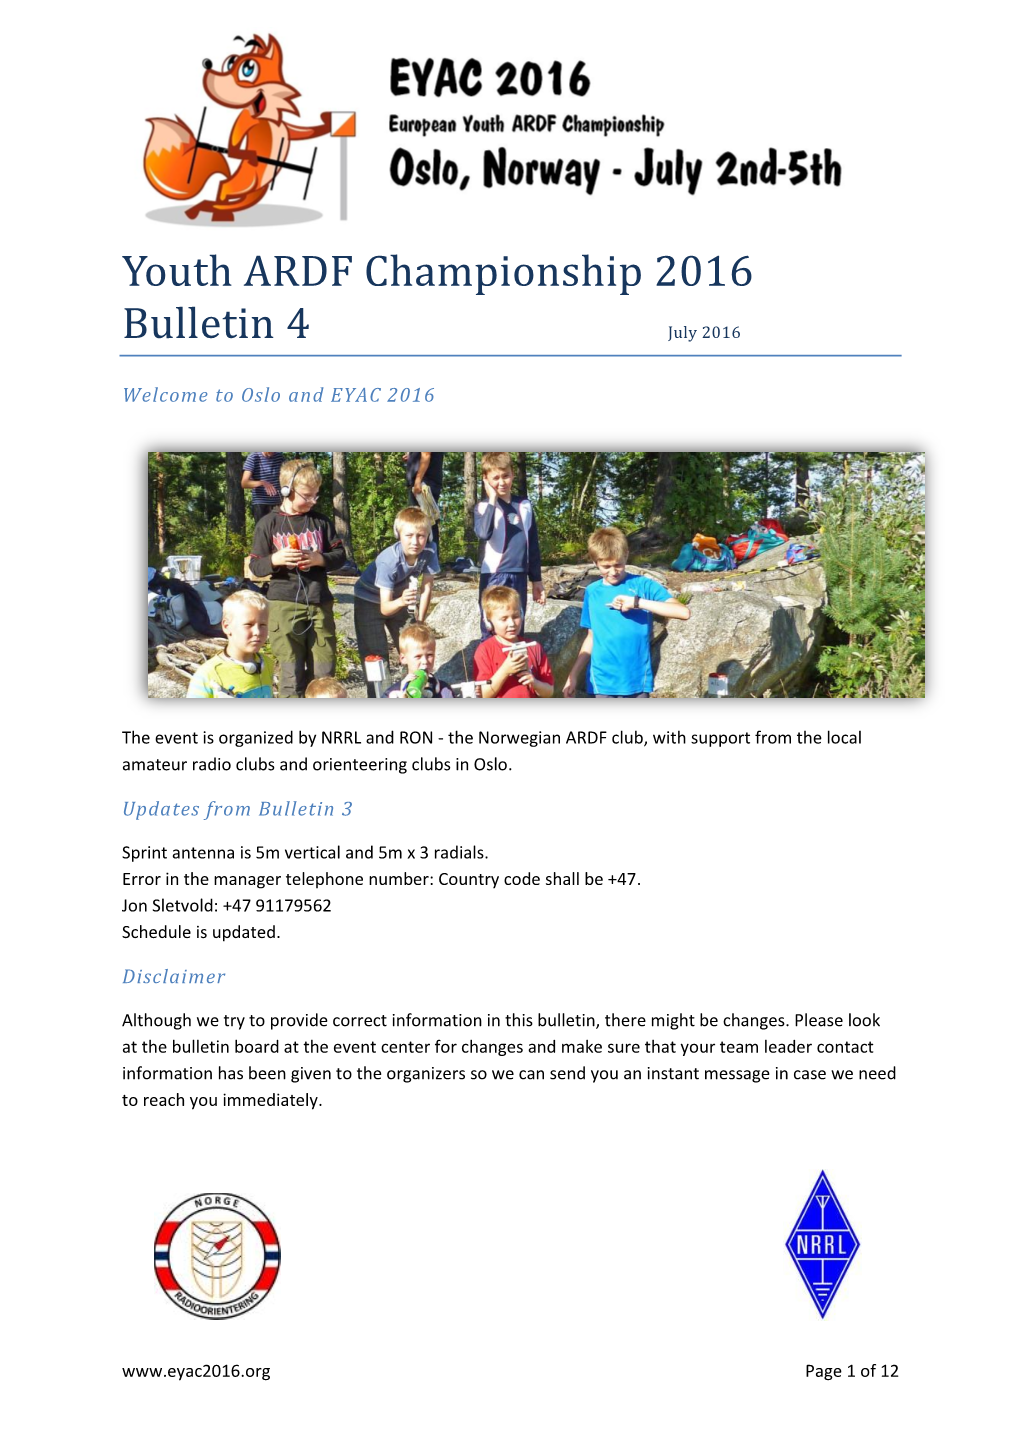 Youth ARDF Championship 2016 Bulletin 4 July 2016